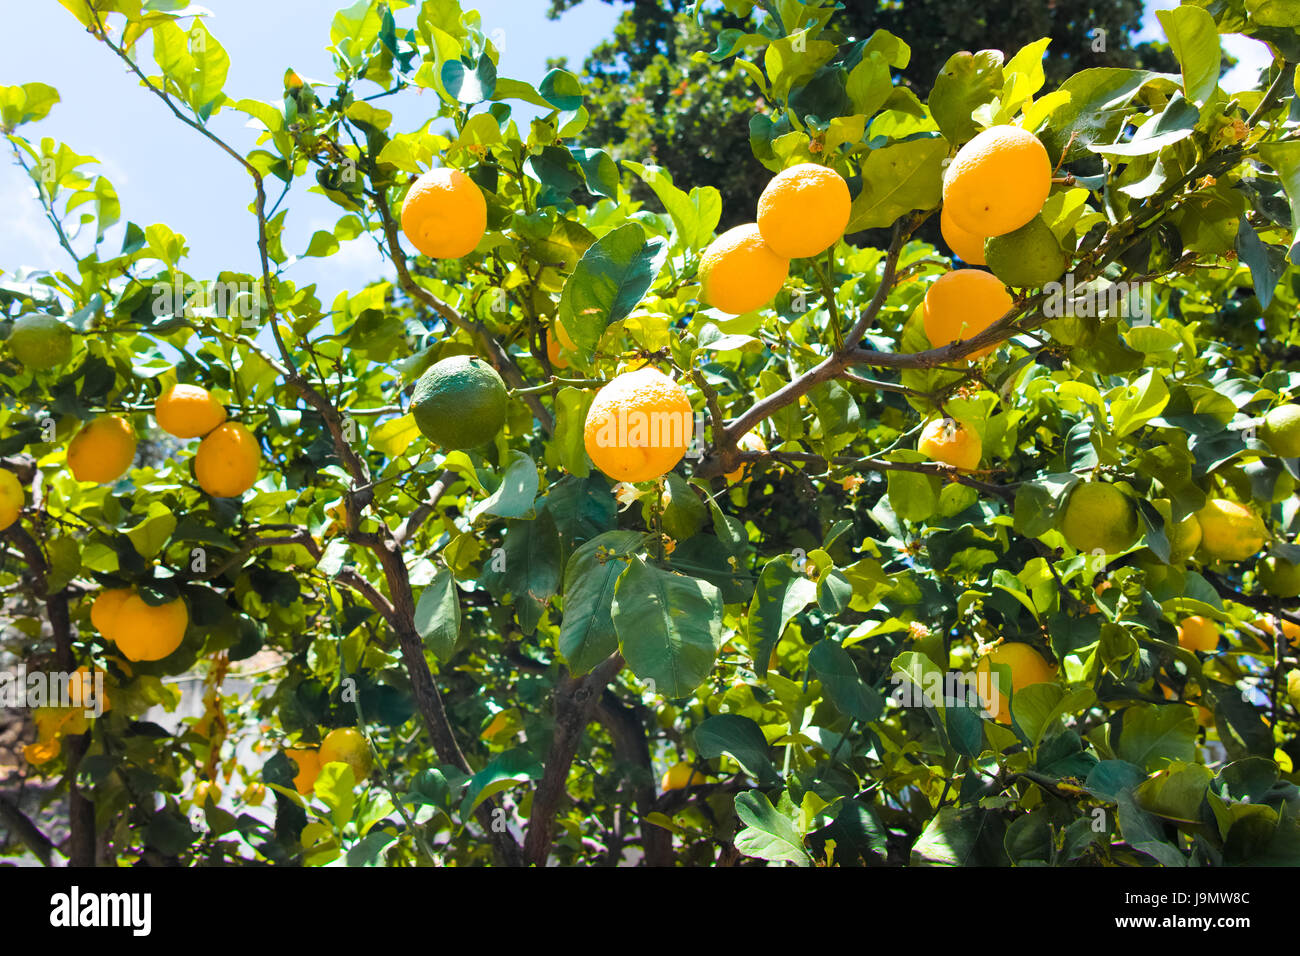 Sicilian lemons on sale Stock Photo - Alamy